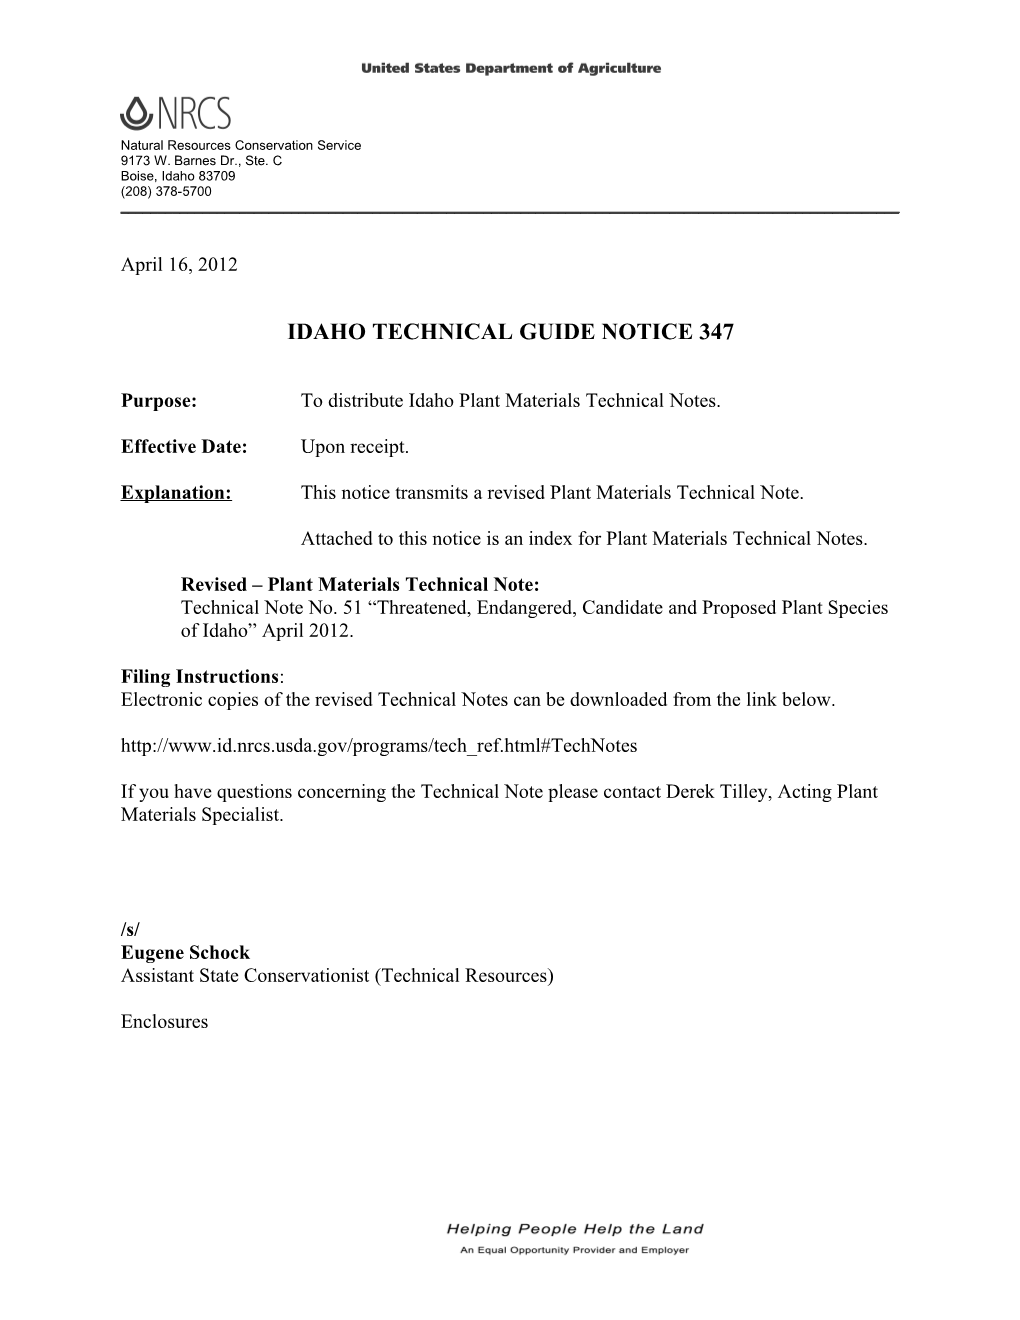 Idaho Technical Guide Notice 347